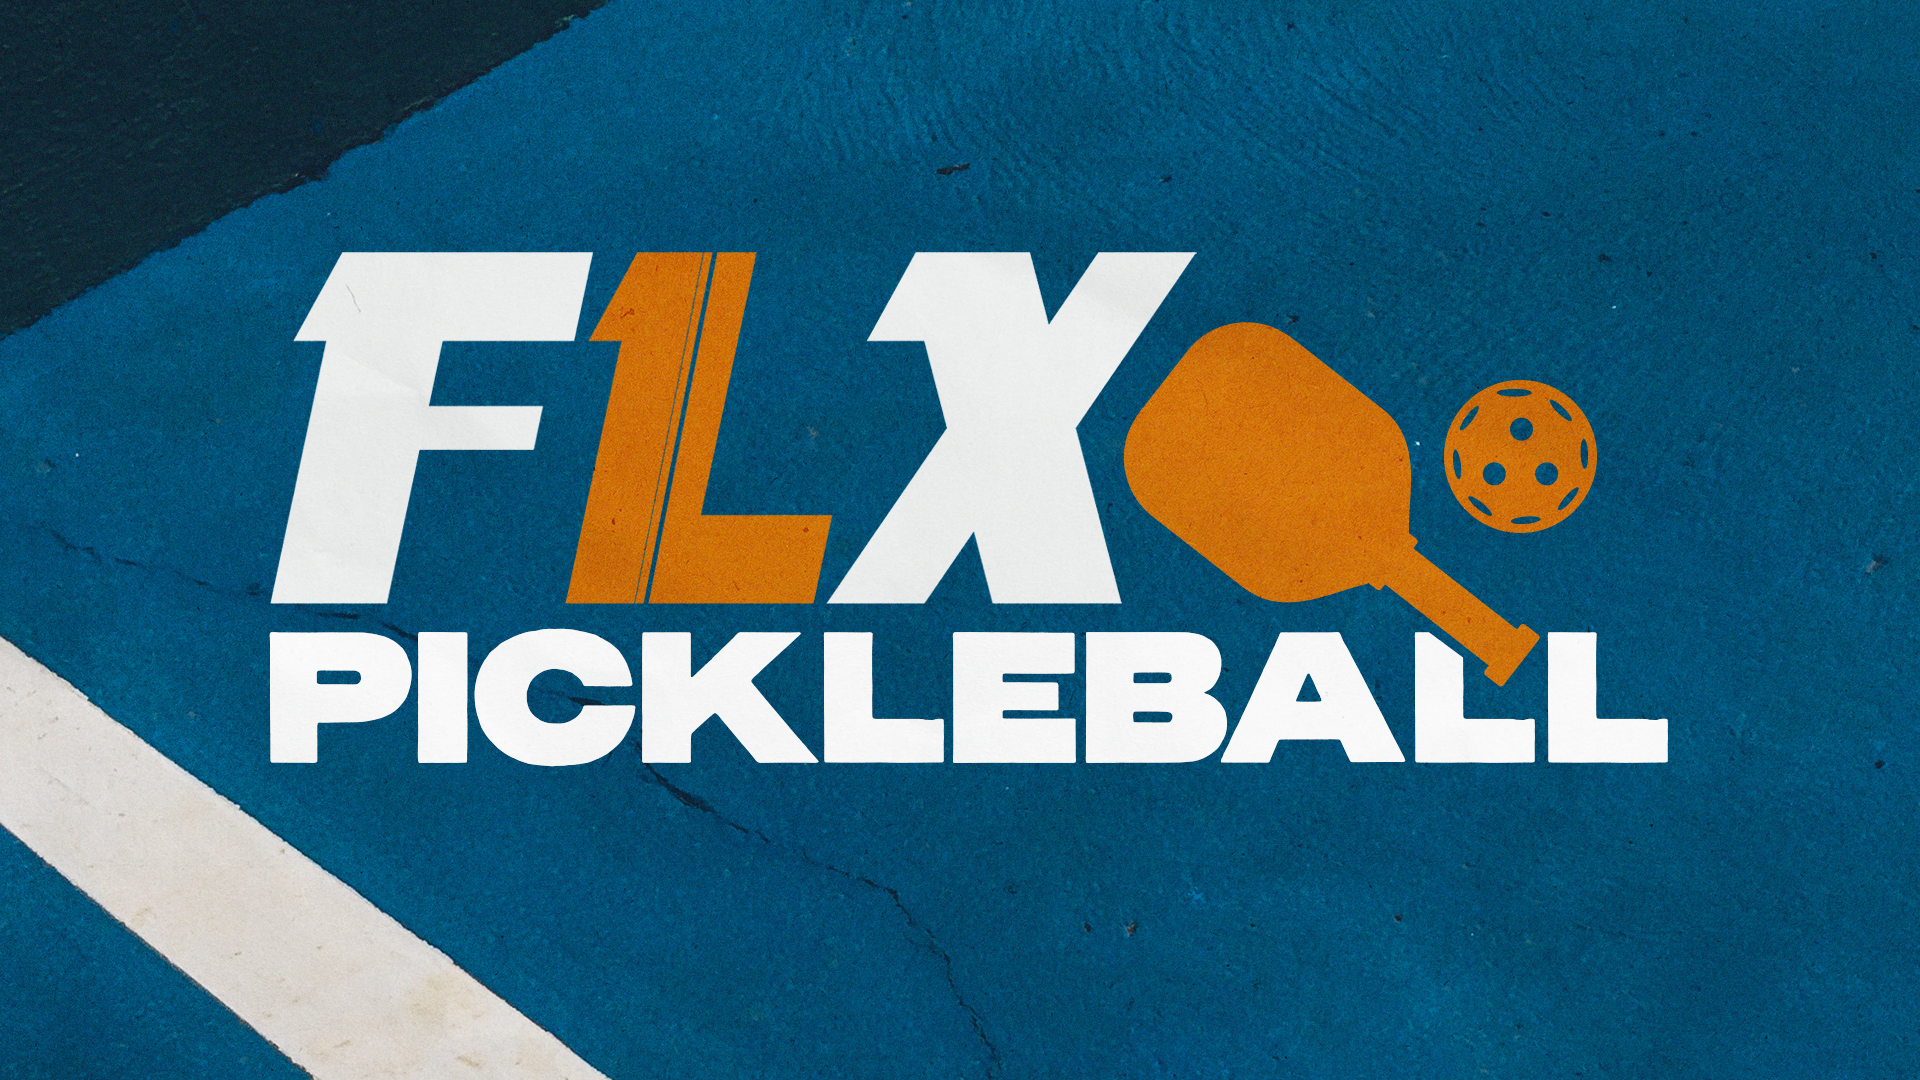 FLX Pickleball - HD Title Slide